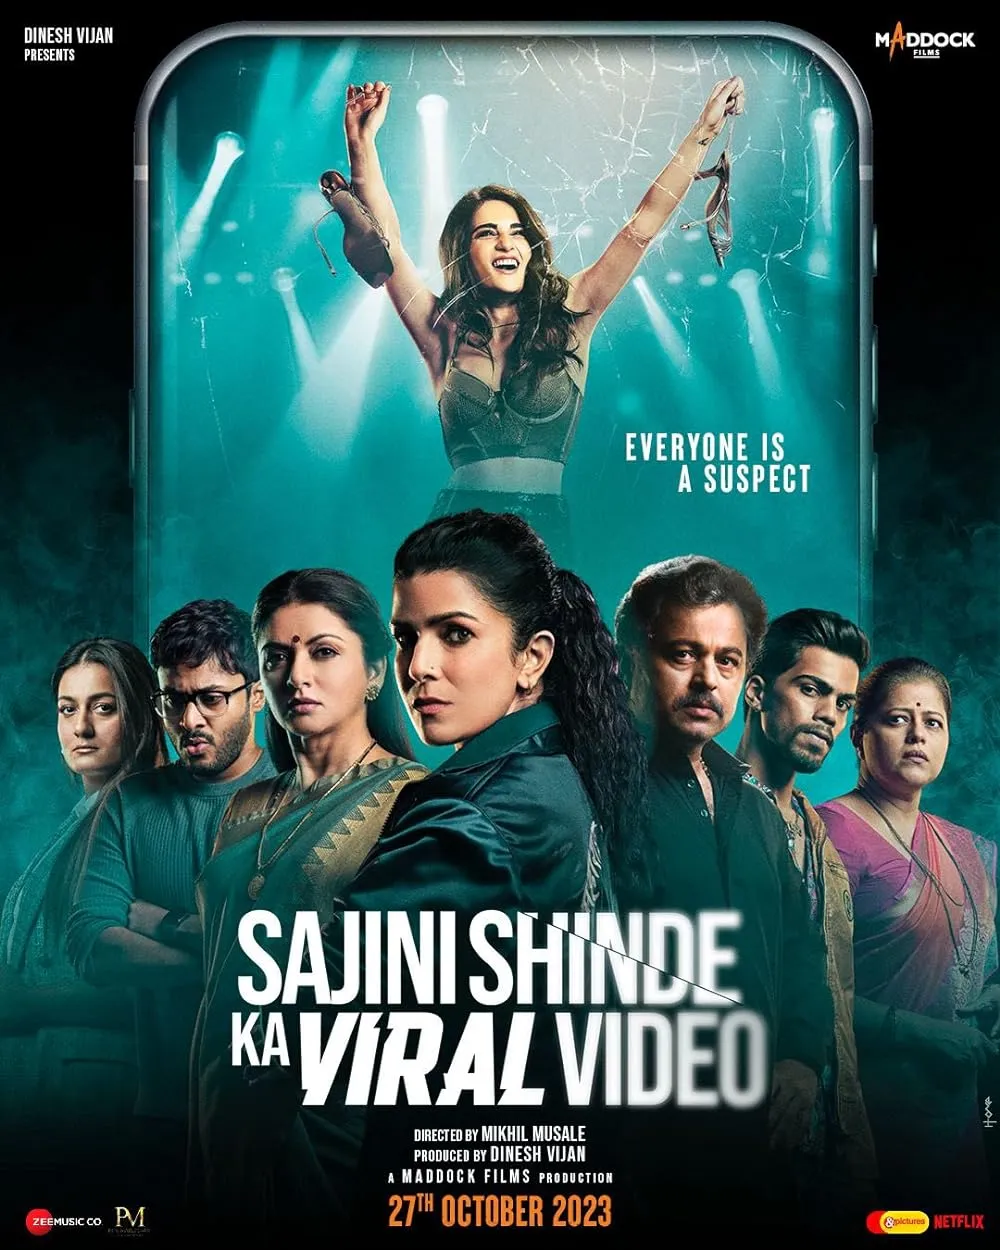 Sajini Shinde Ka Viral Video 2023 Hindi 1080p HDRip ESub 2.2GB Download